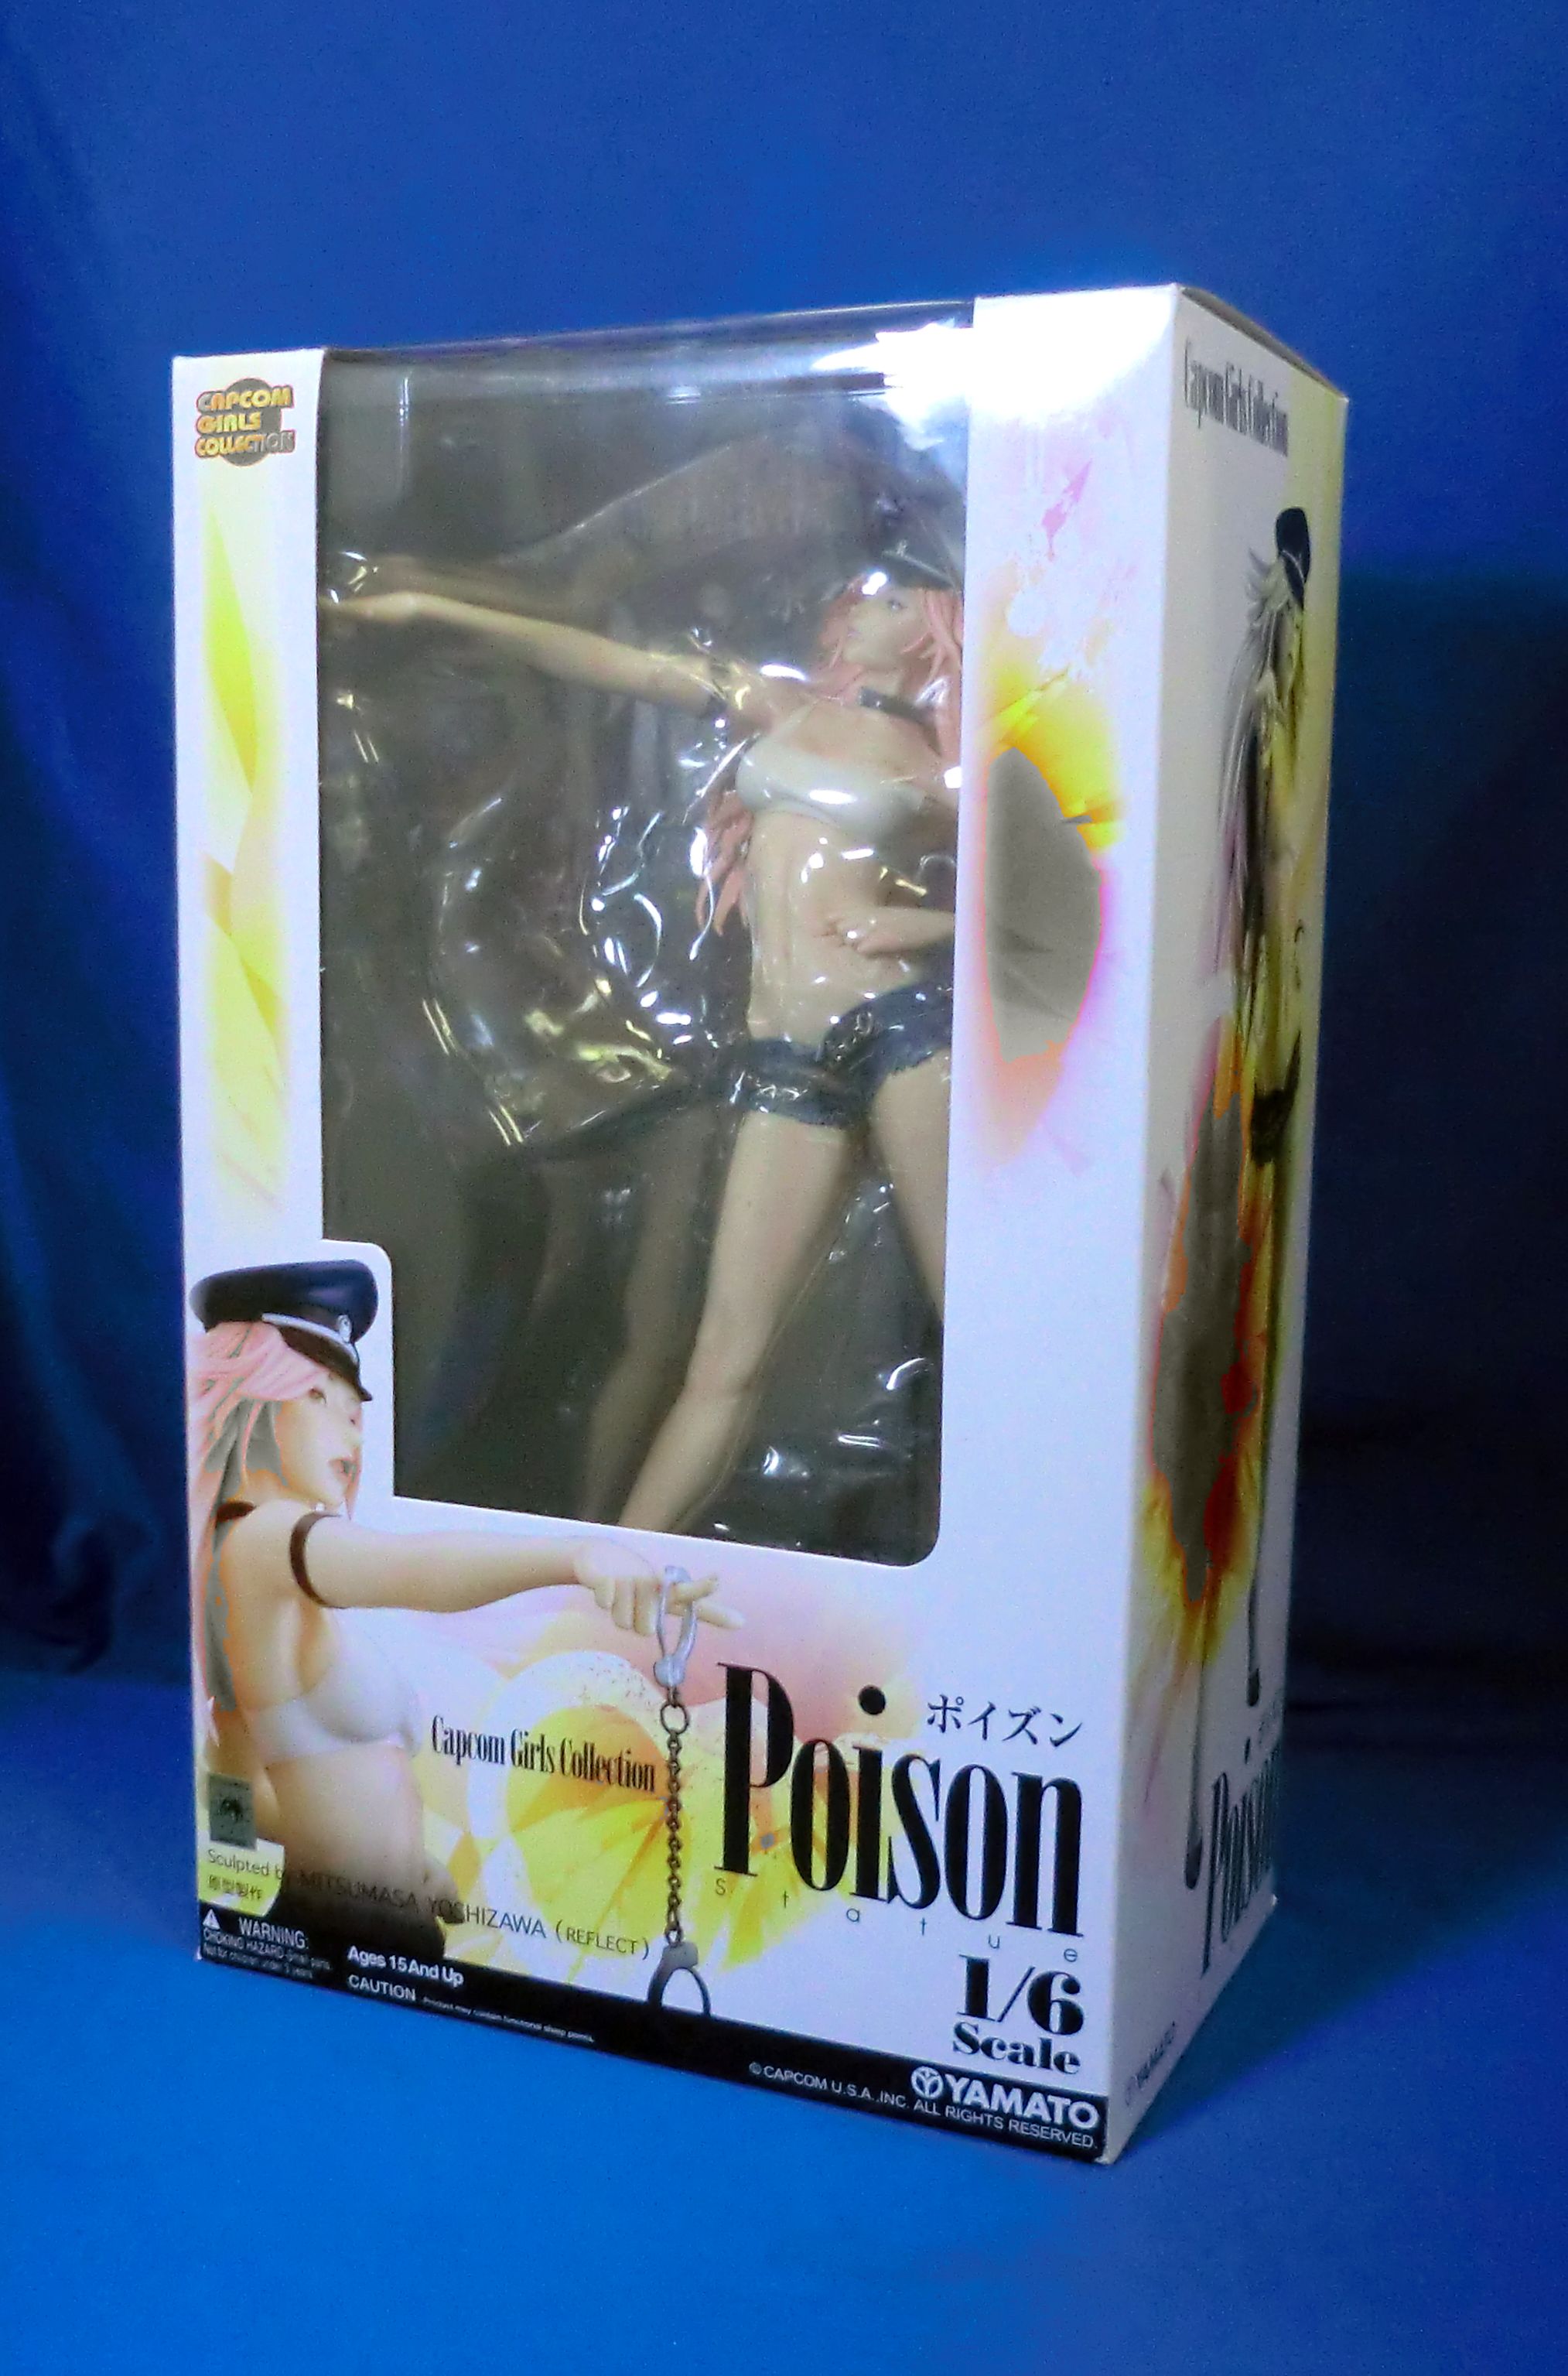 Yamato Capcom Girls Collction Poison 1/6